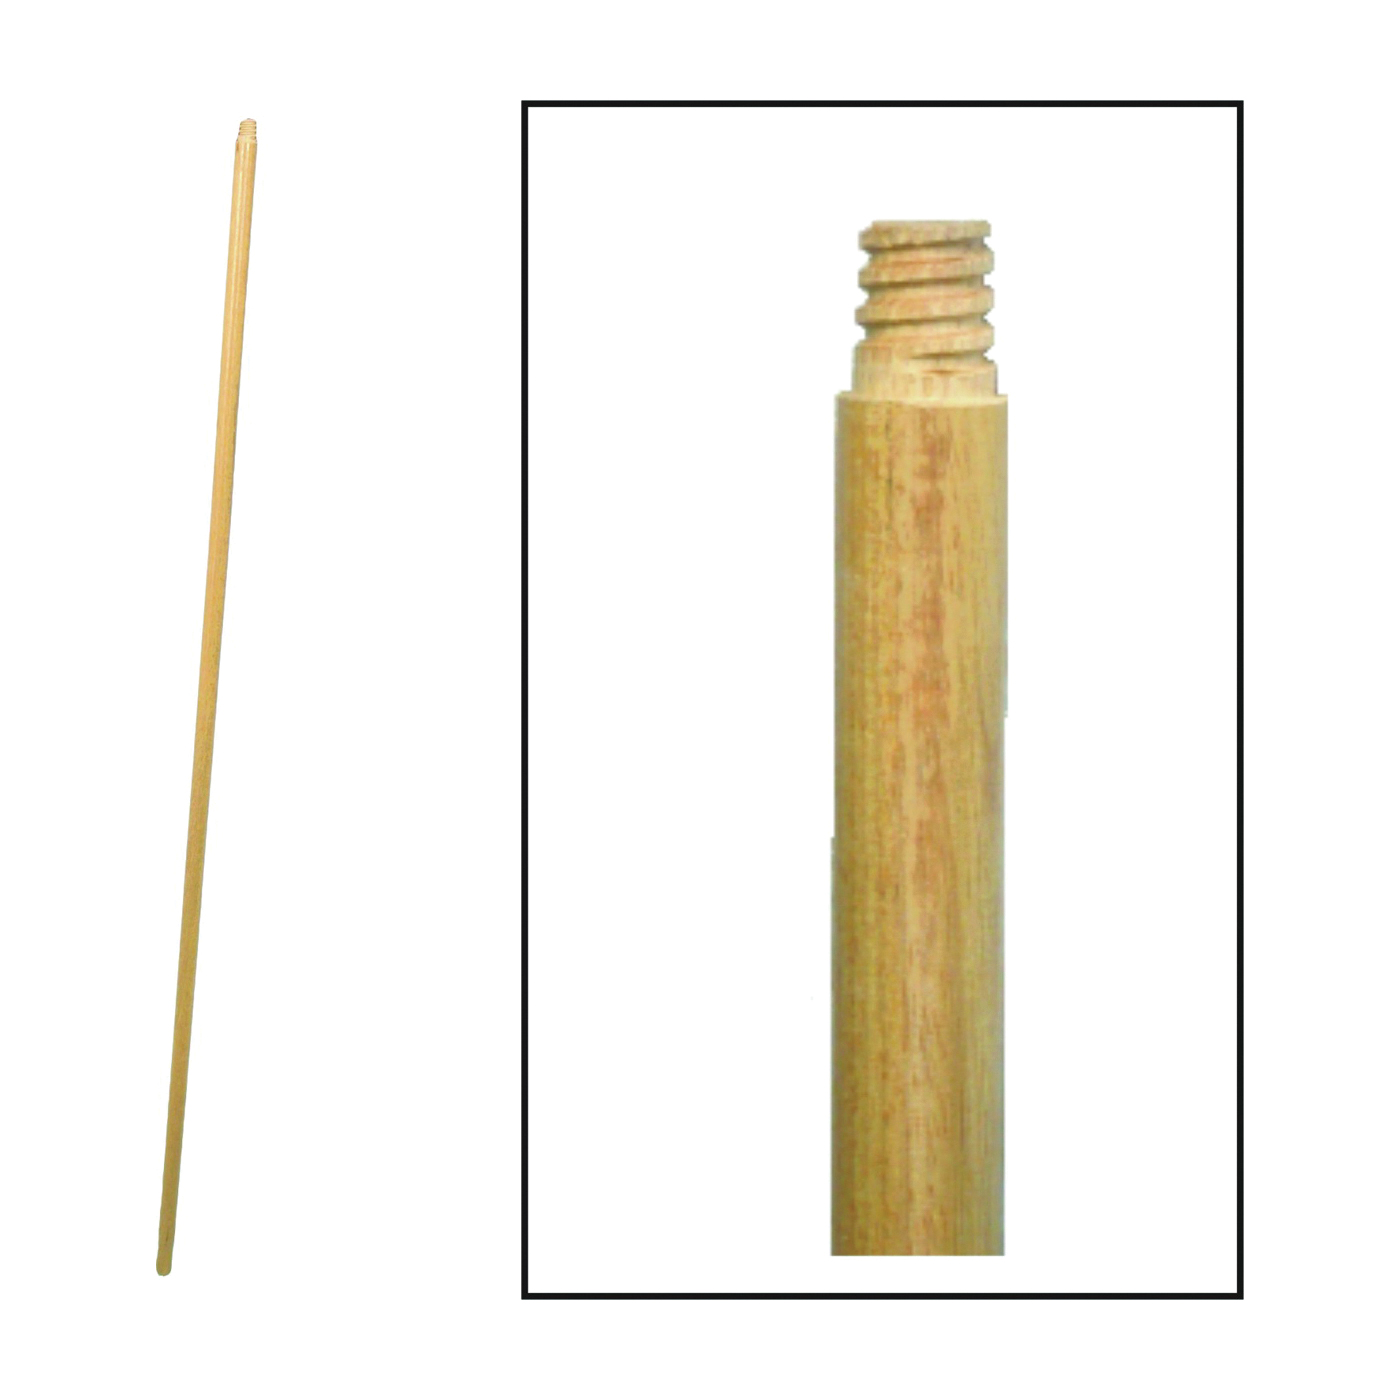 532-12 Broom Handle, 15/16 in Dia, 48 in L, Threaded, Hardwood